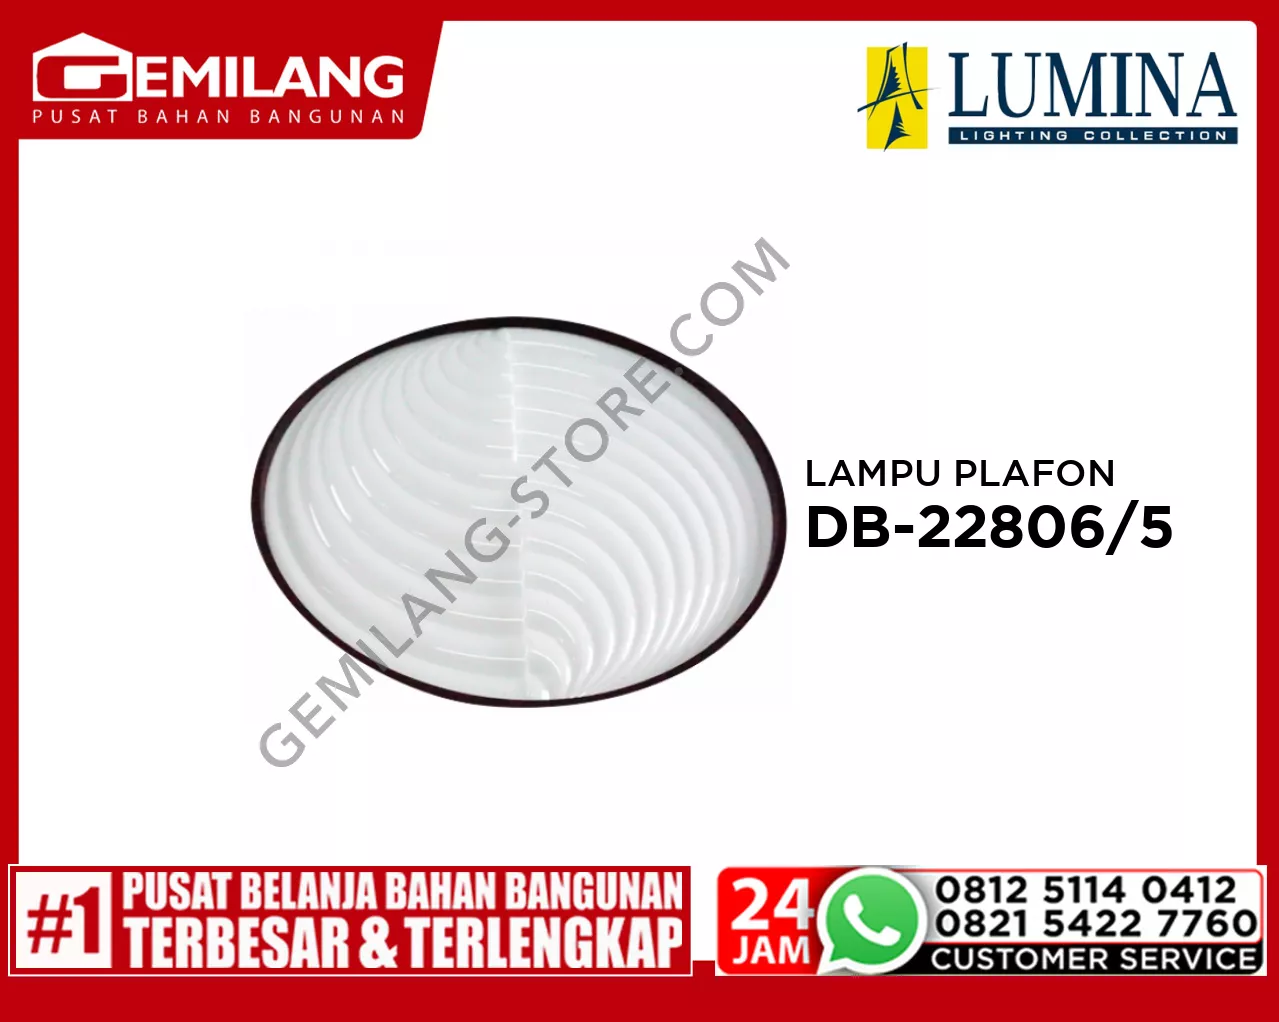 LAMPU PLAFON DB-22806/500